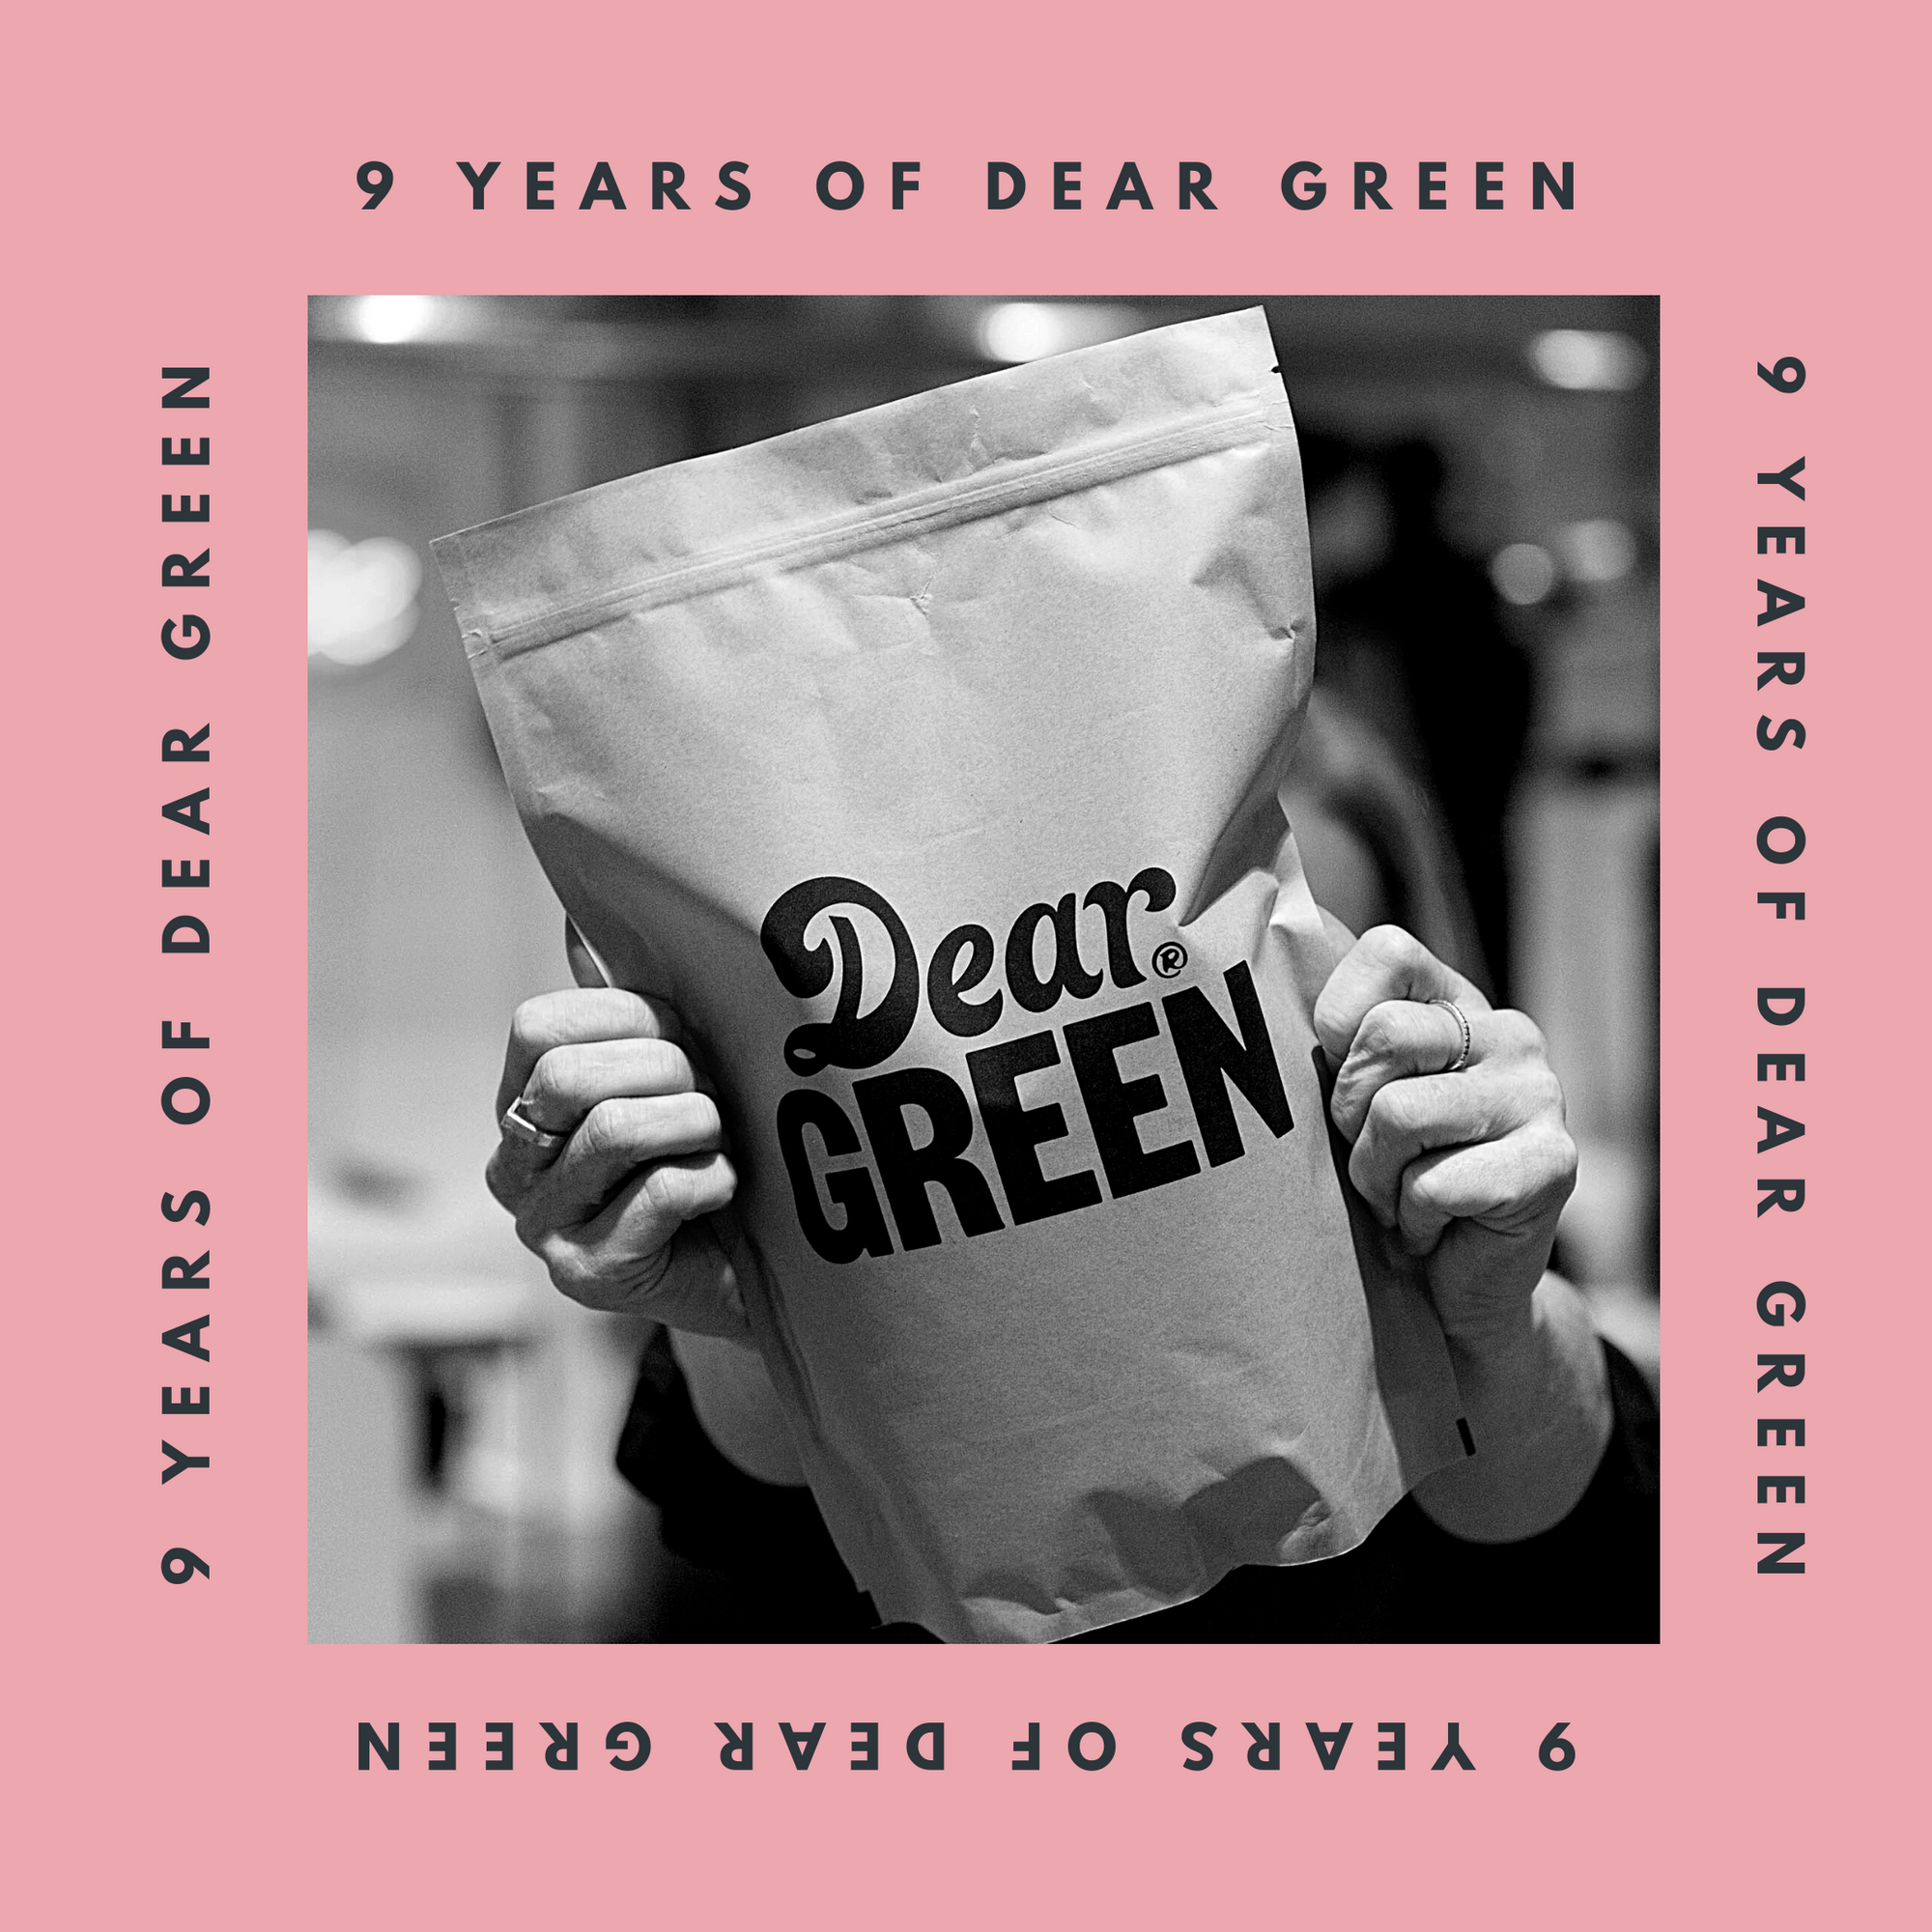 9 Years of Dear Green